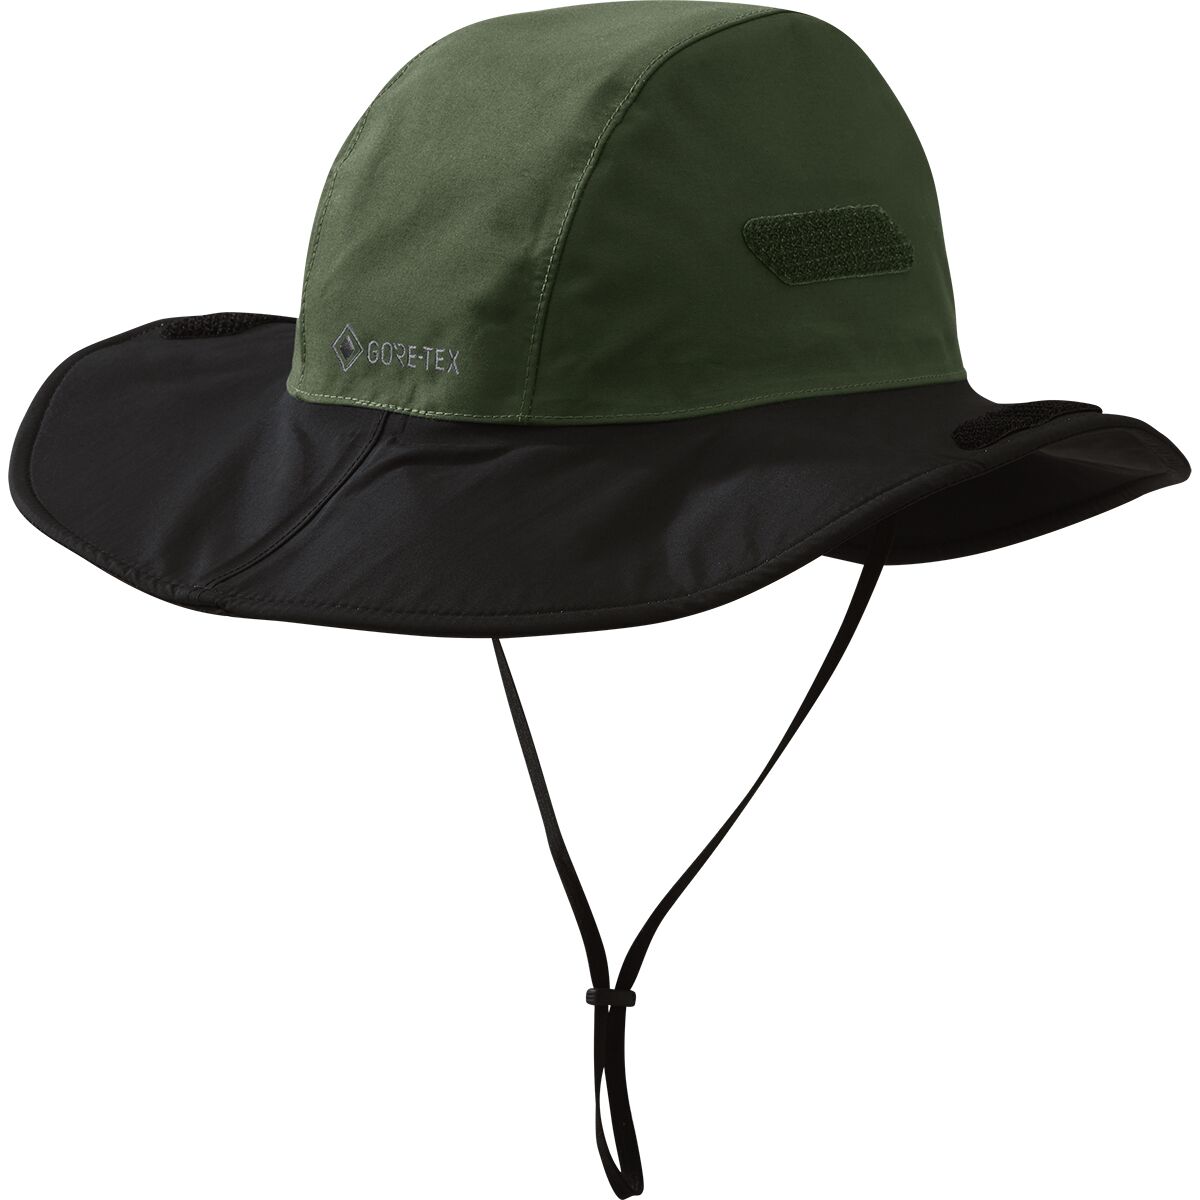 Outdoor Research Seattle Sombrero Rain Hat - Black